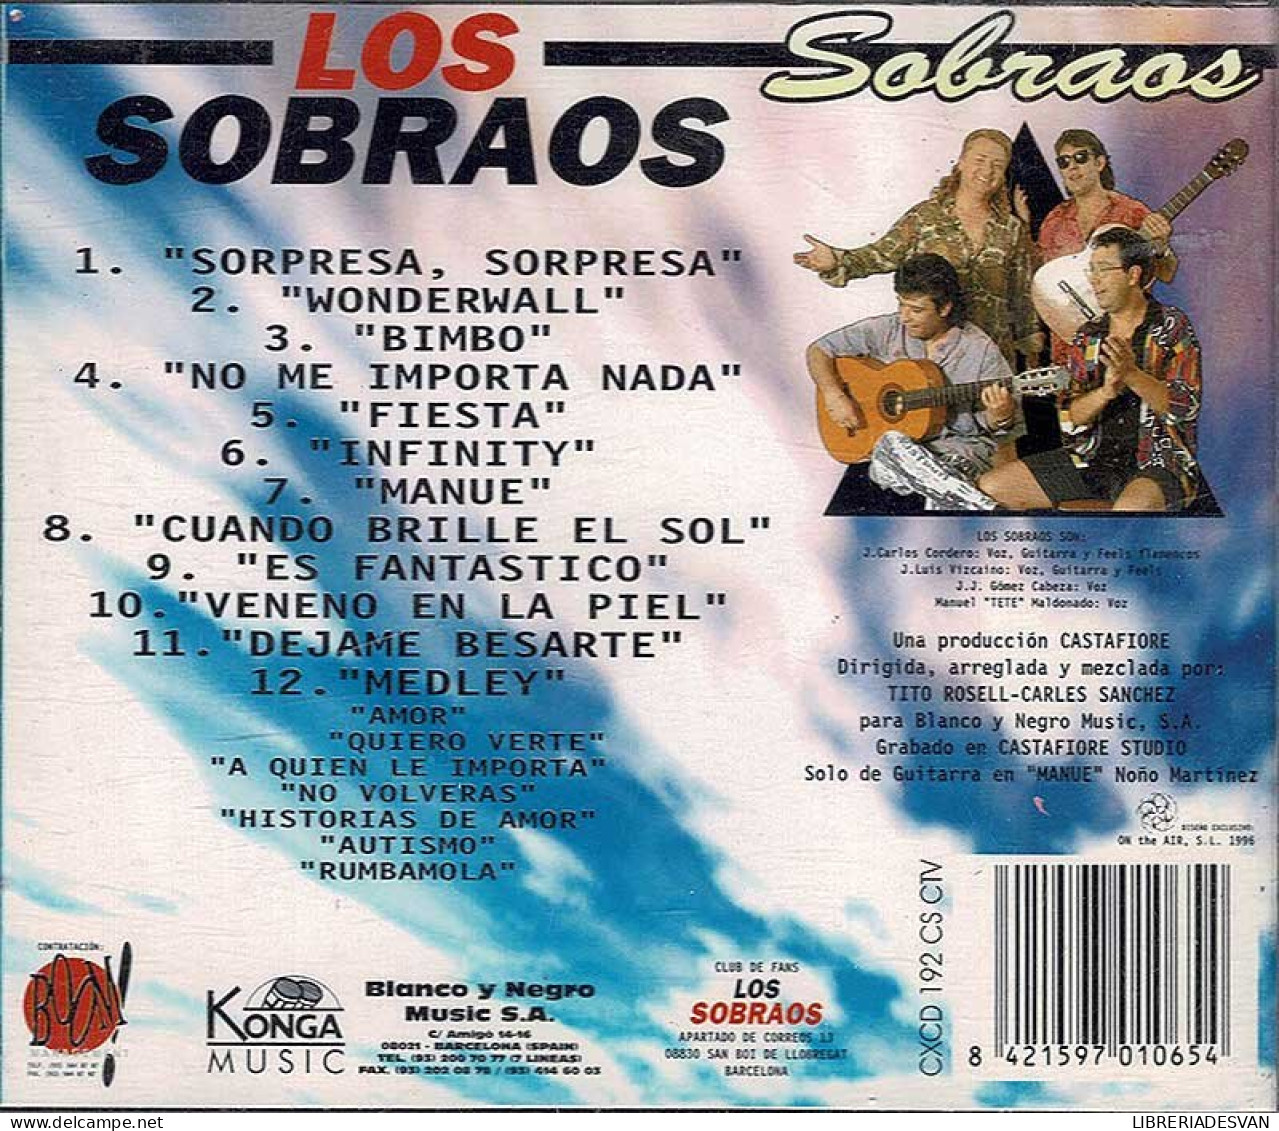 Los Sobraos - Sobraos. CD - Other - Spanish Music